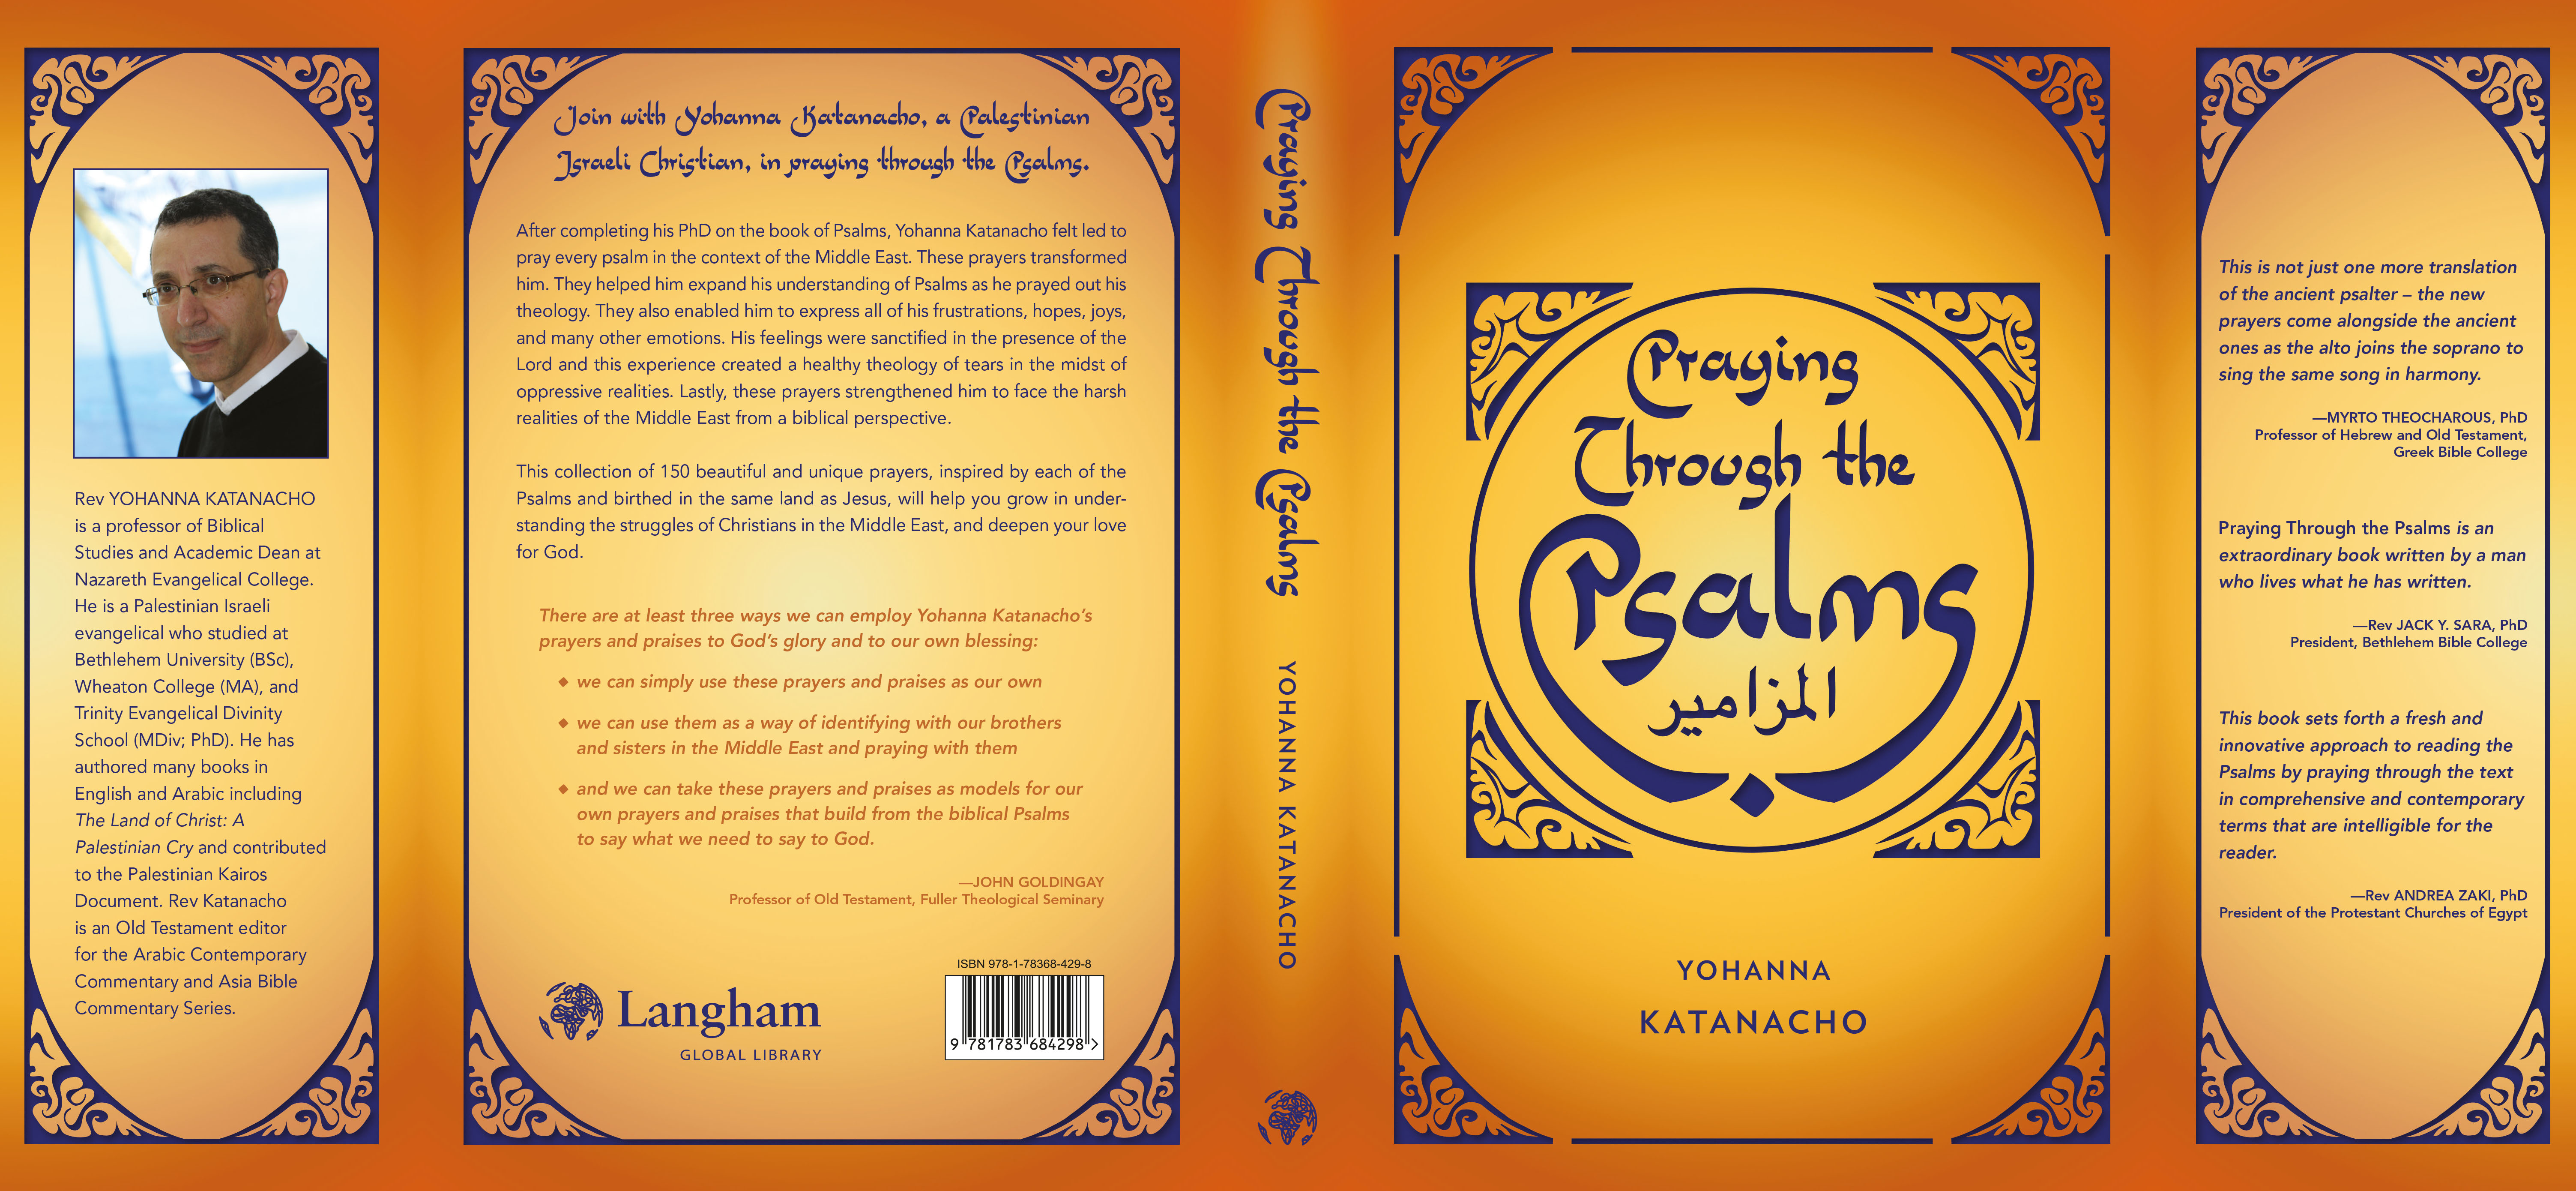 Praying Through the Psalms by Yohanna Katanacho – Hardback Cover